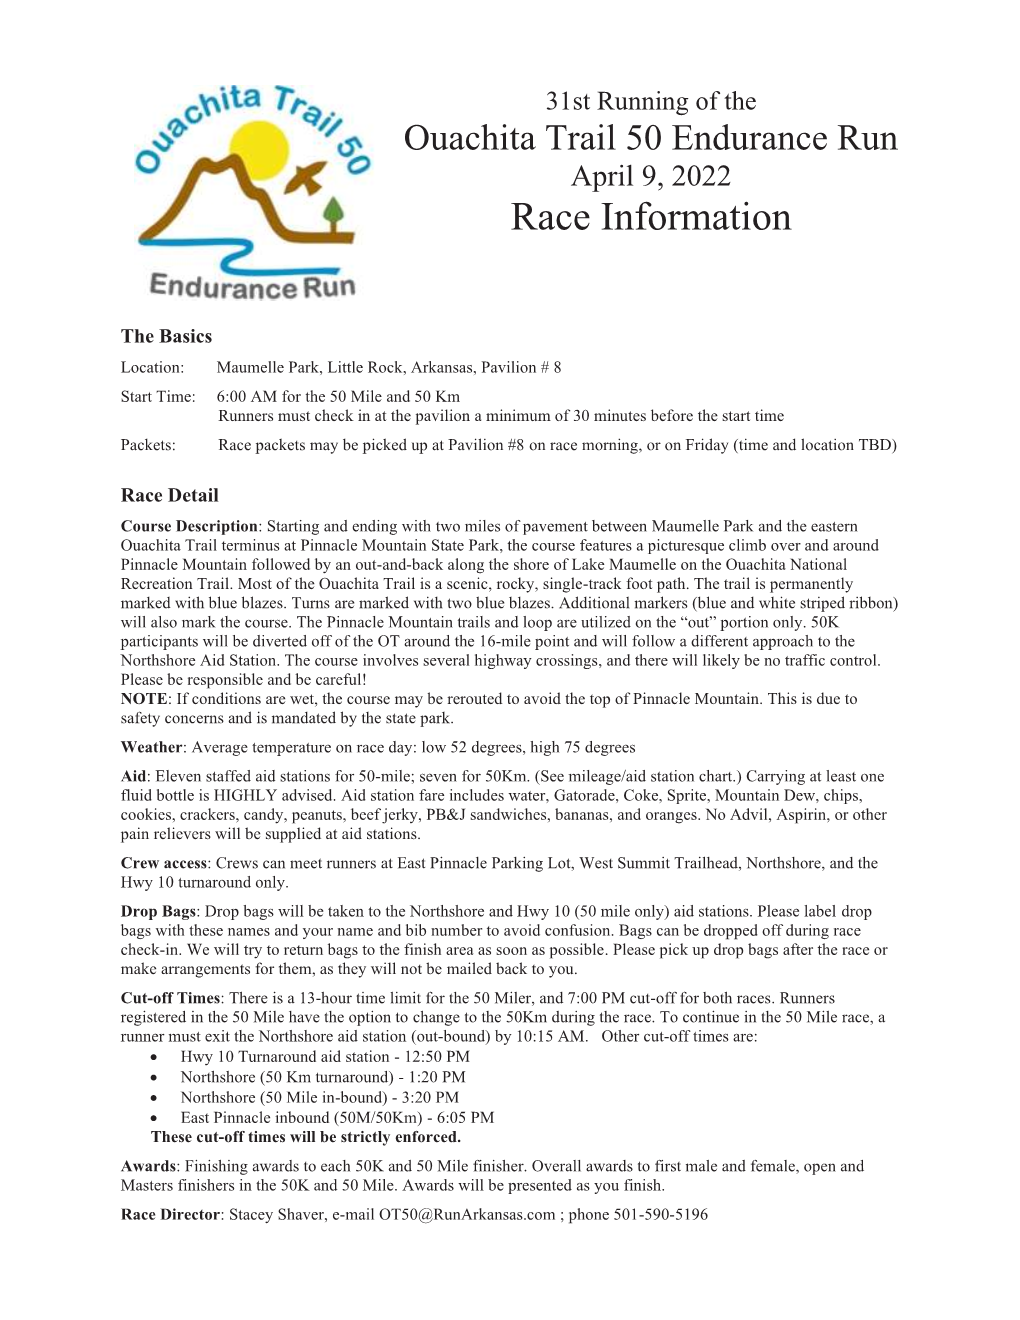 Race Information